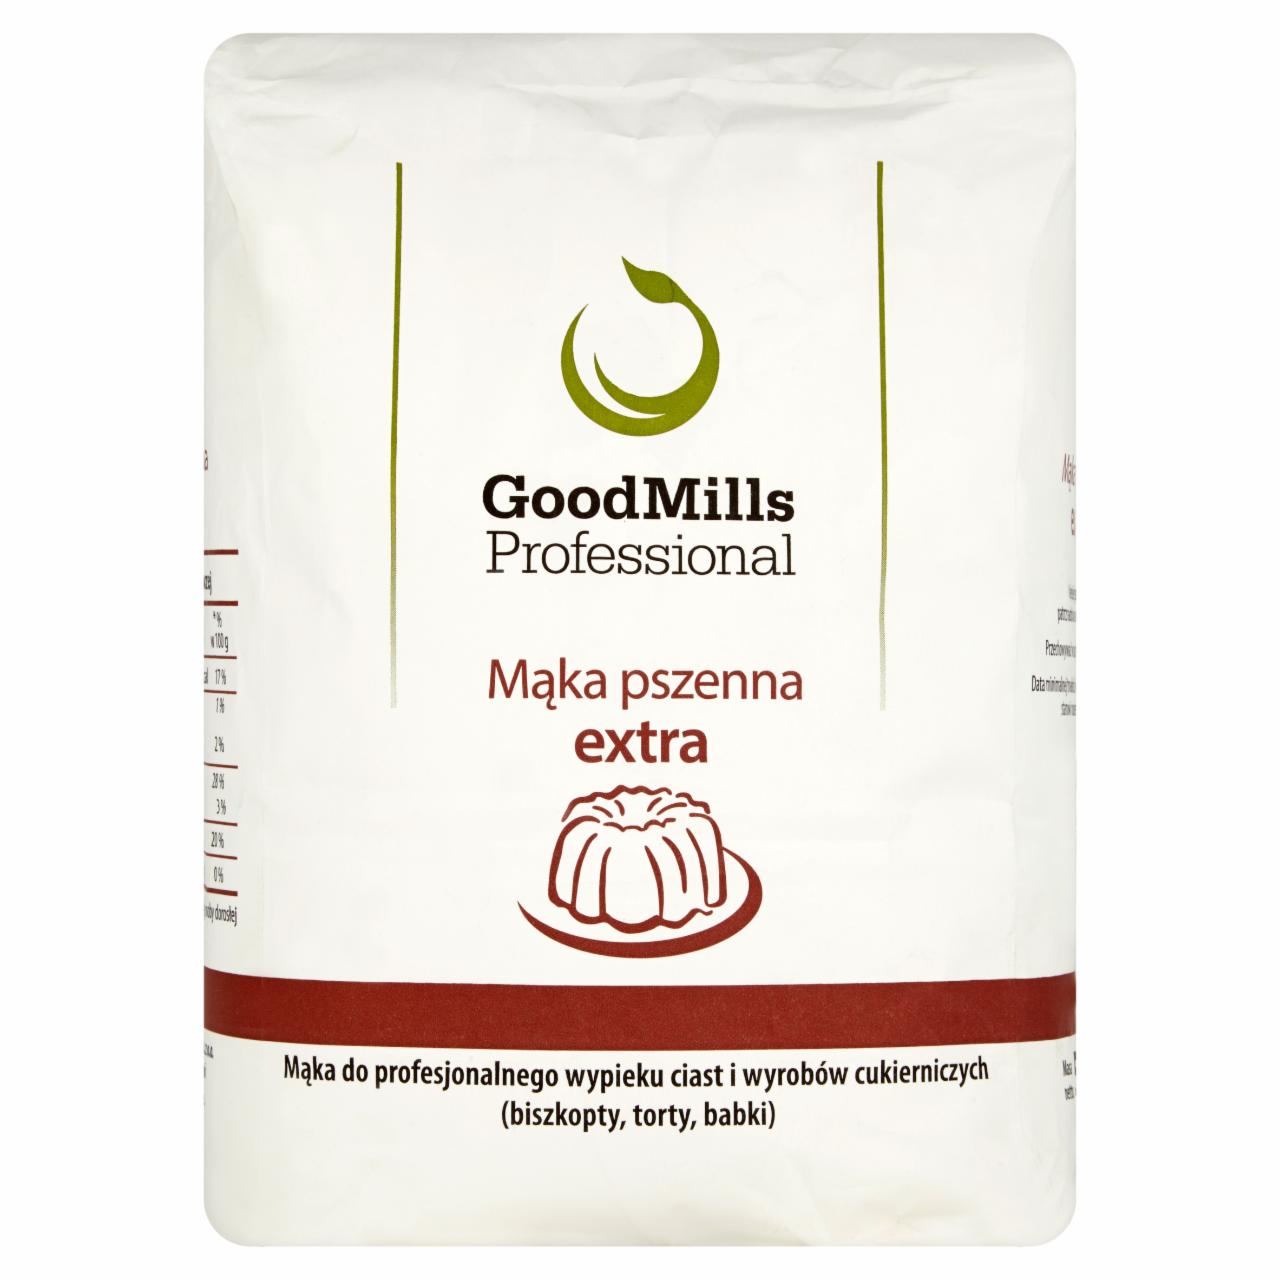 Zdjęcia - GoodMills Professional Mąka pszenna extra typ 405 5 kg